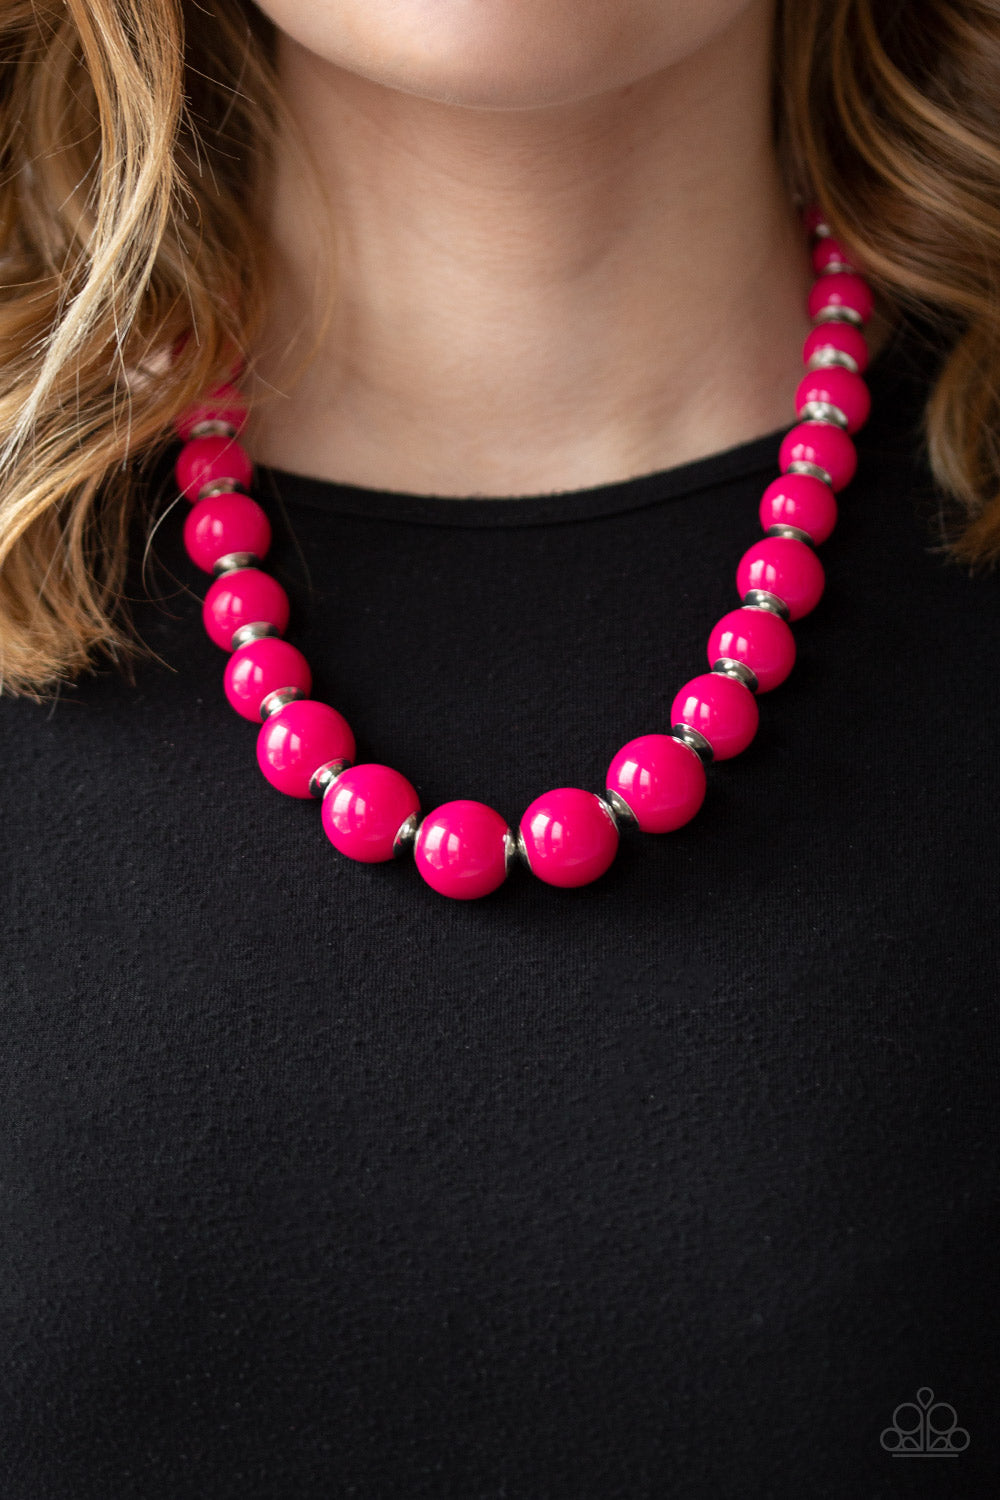 Everyday Eye Candy - Pink necklace w/ matching bracelet